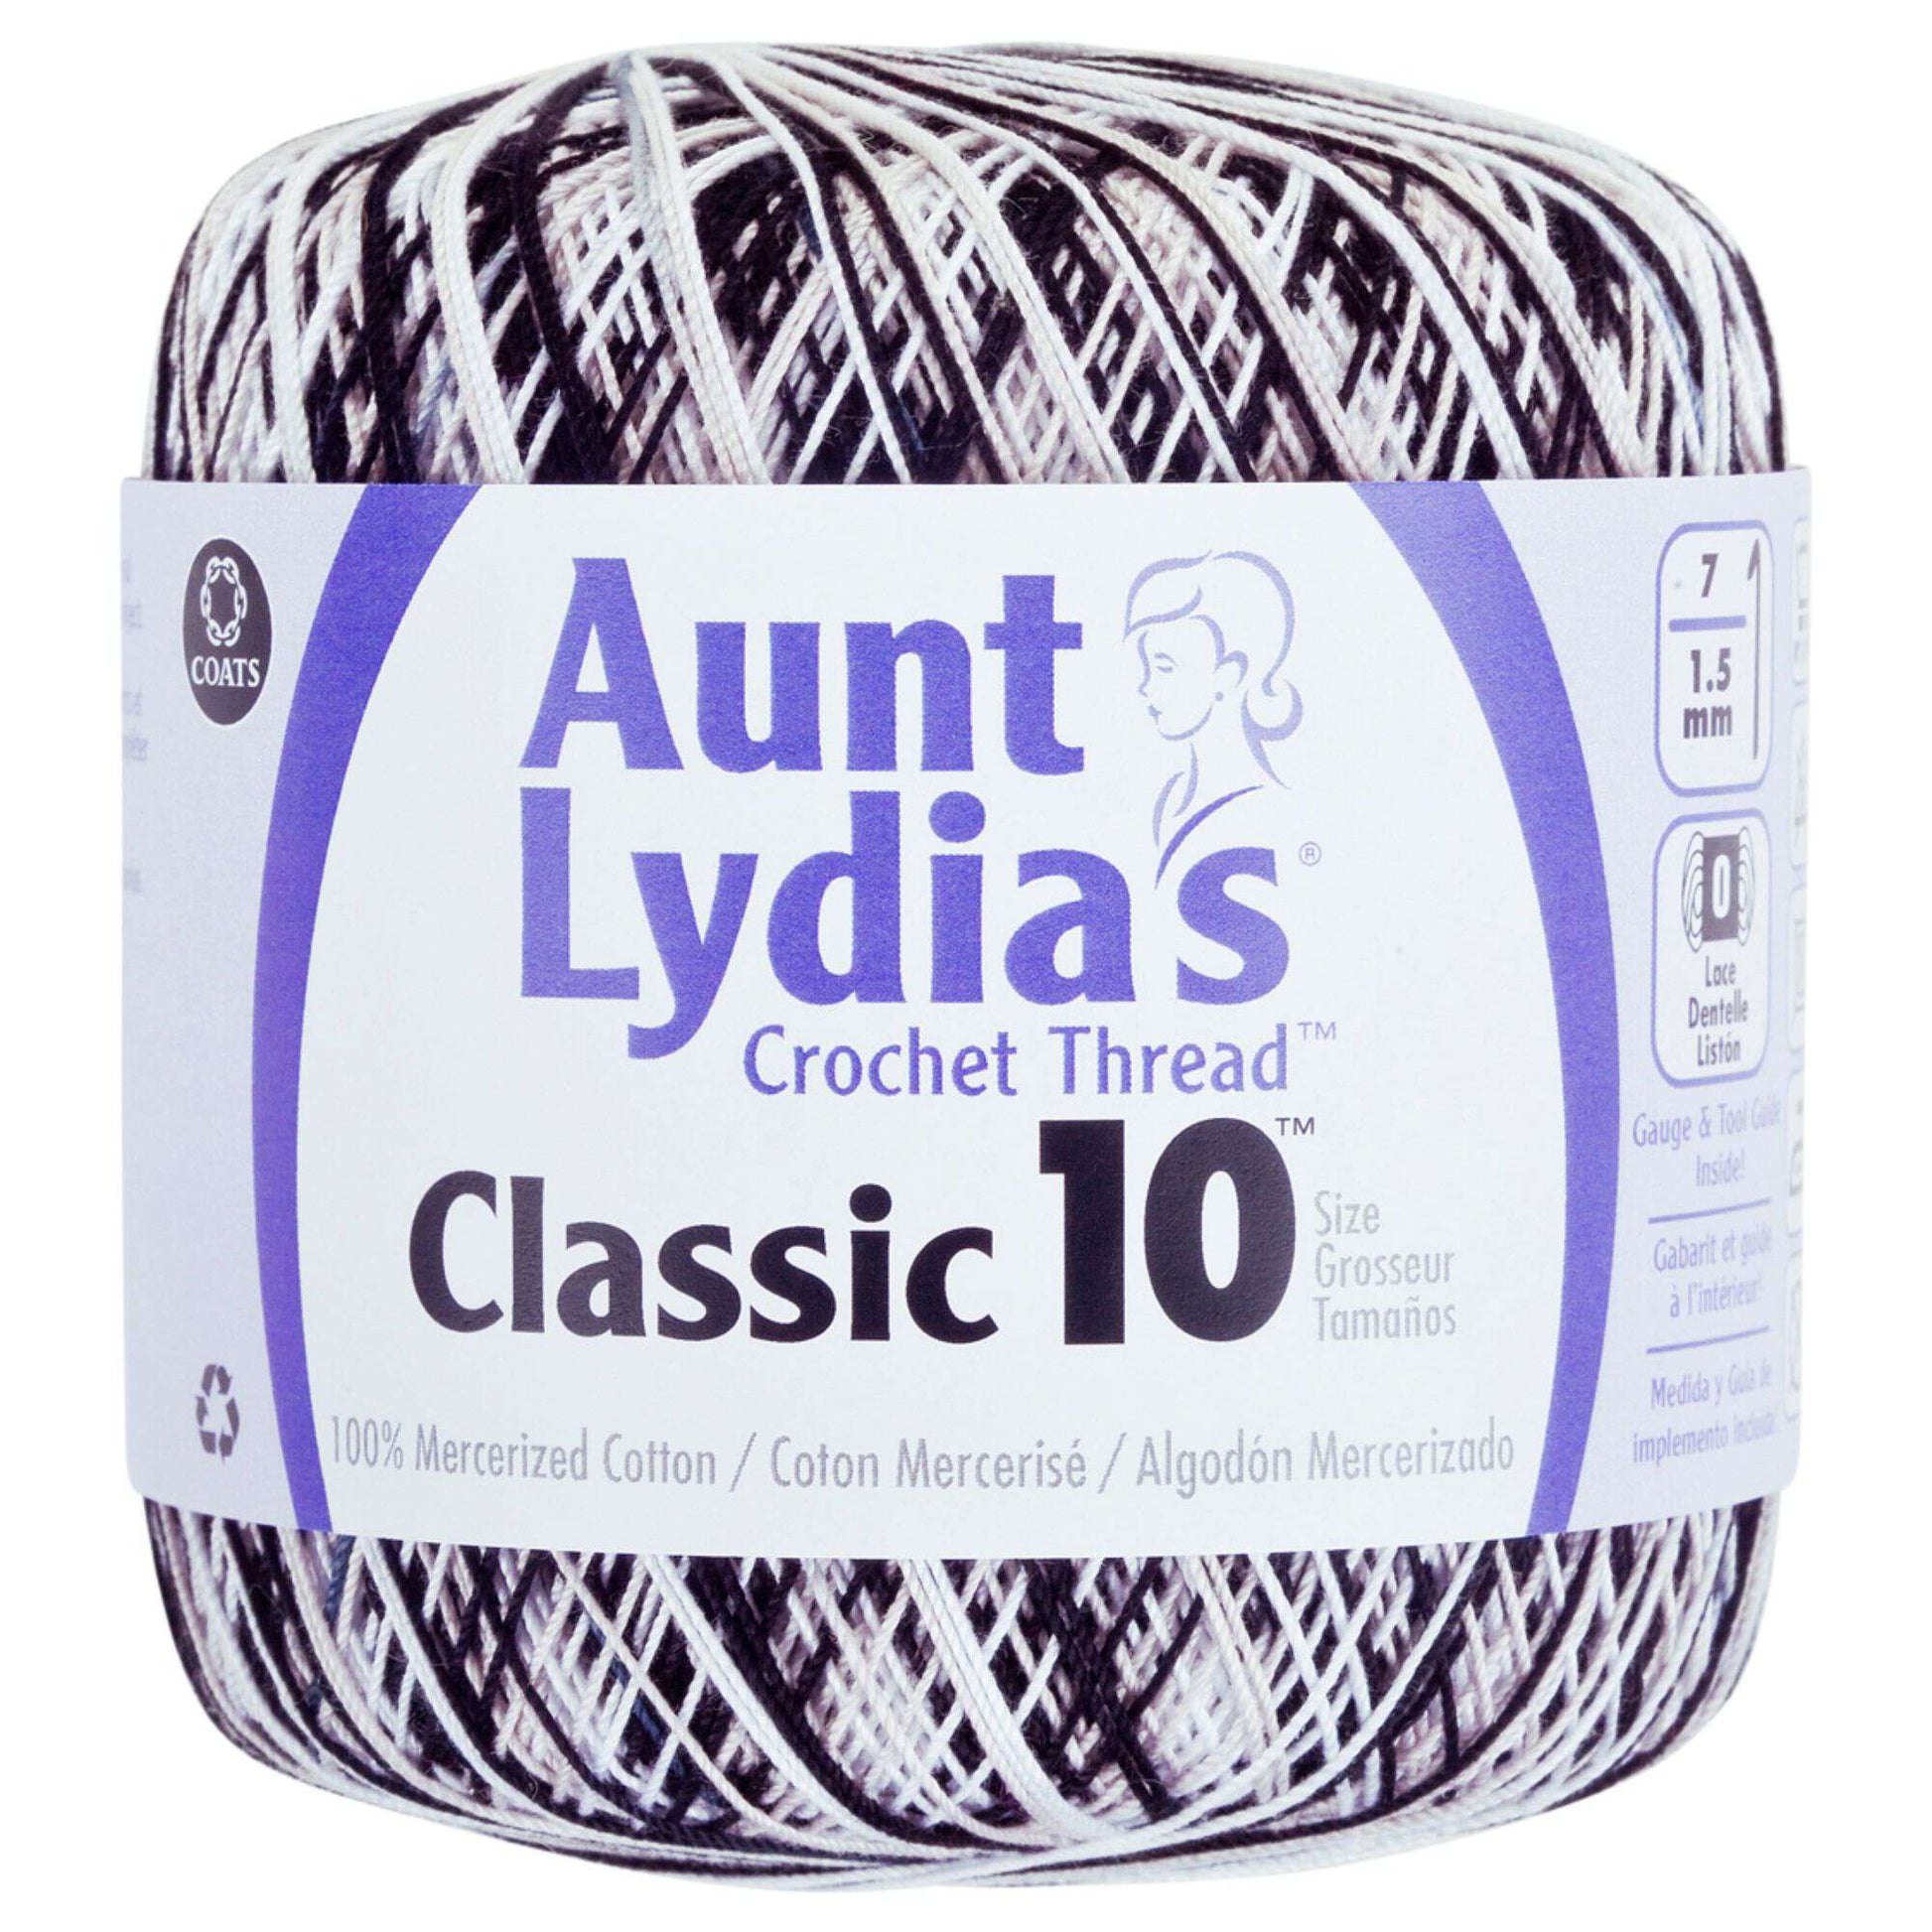 Aunt Lydia's Classic Crochet Thread Size 10 - Clearance shades Zebra